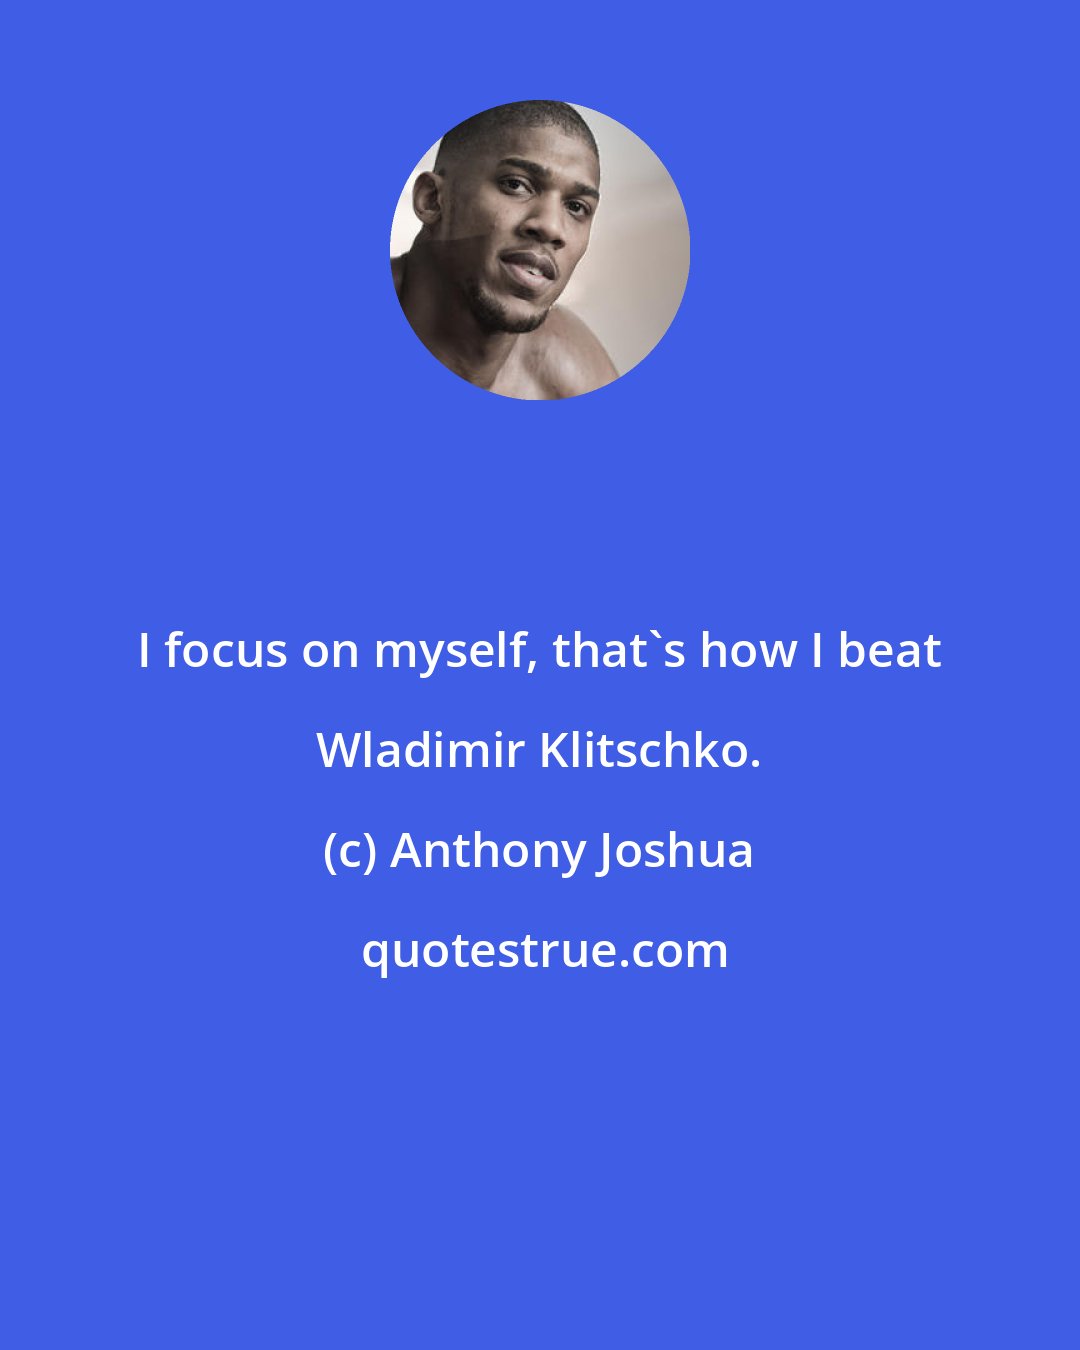 Anthony Joshua: I focus on myself, that's how I beat Wladimir Klitschko.